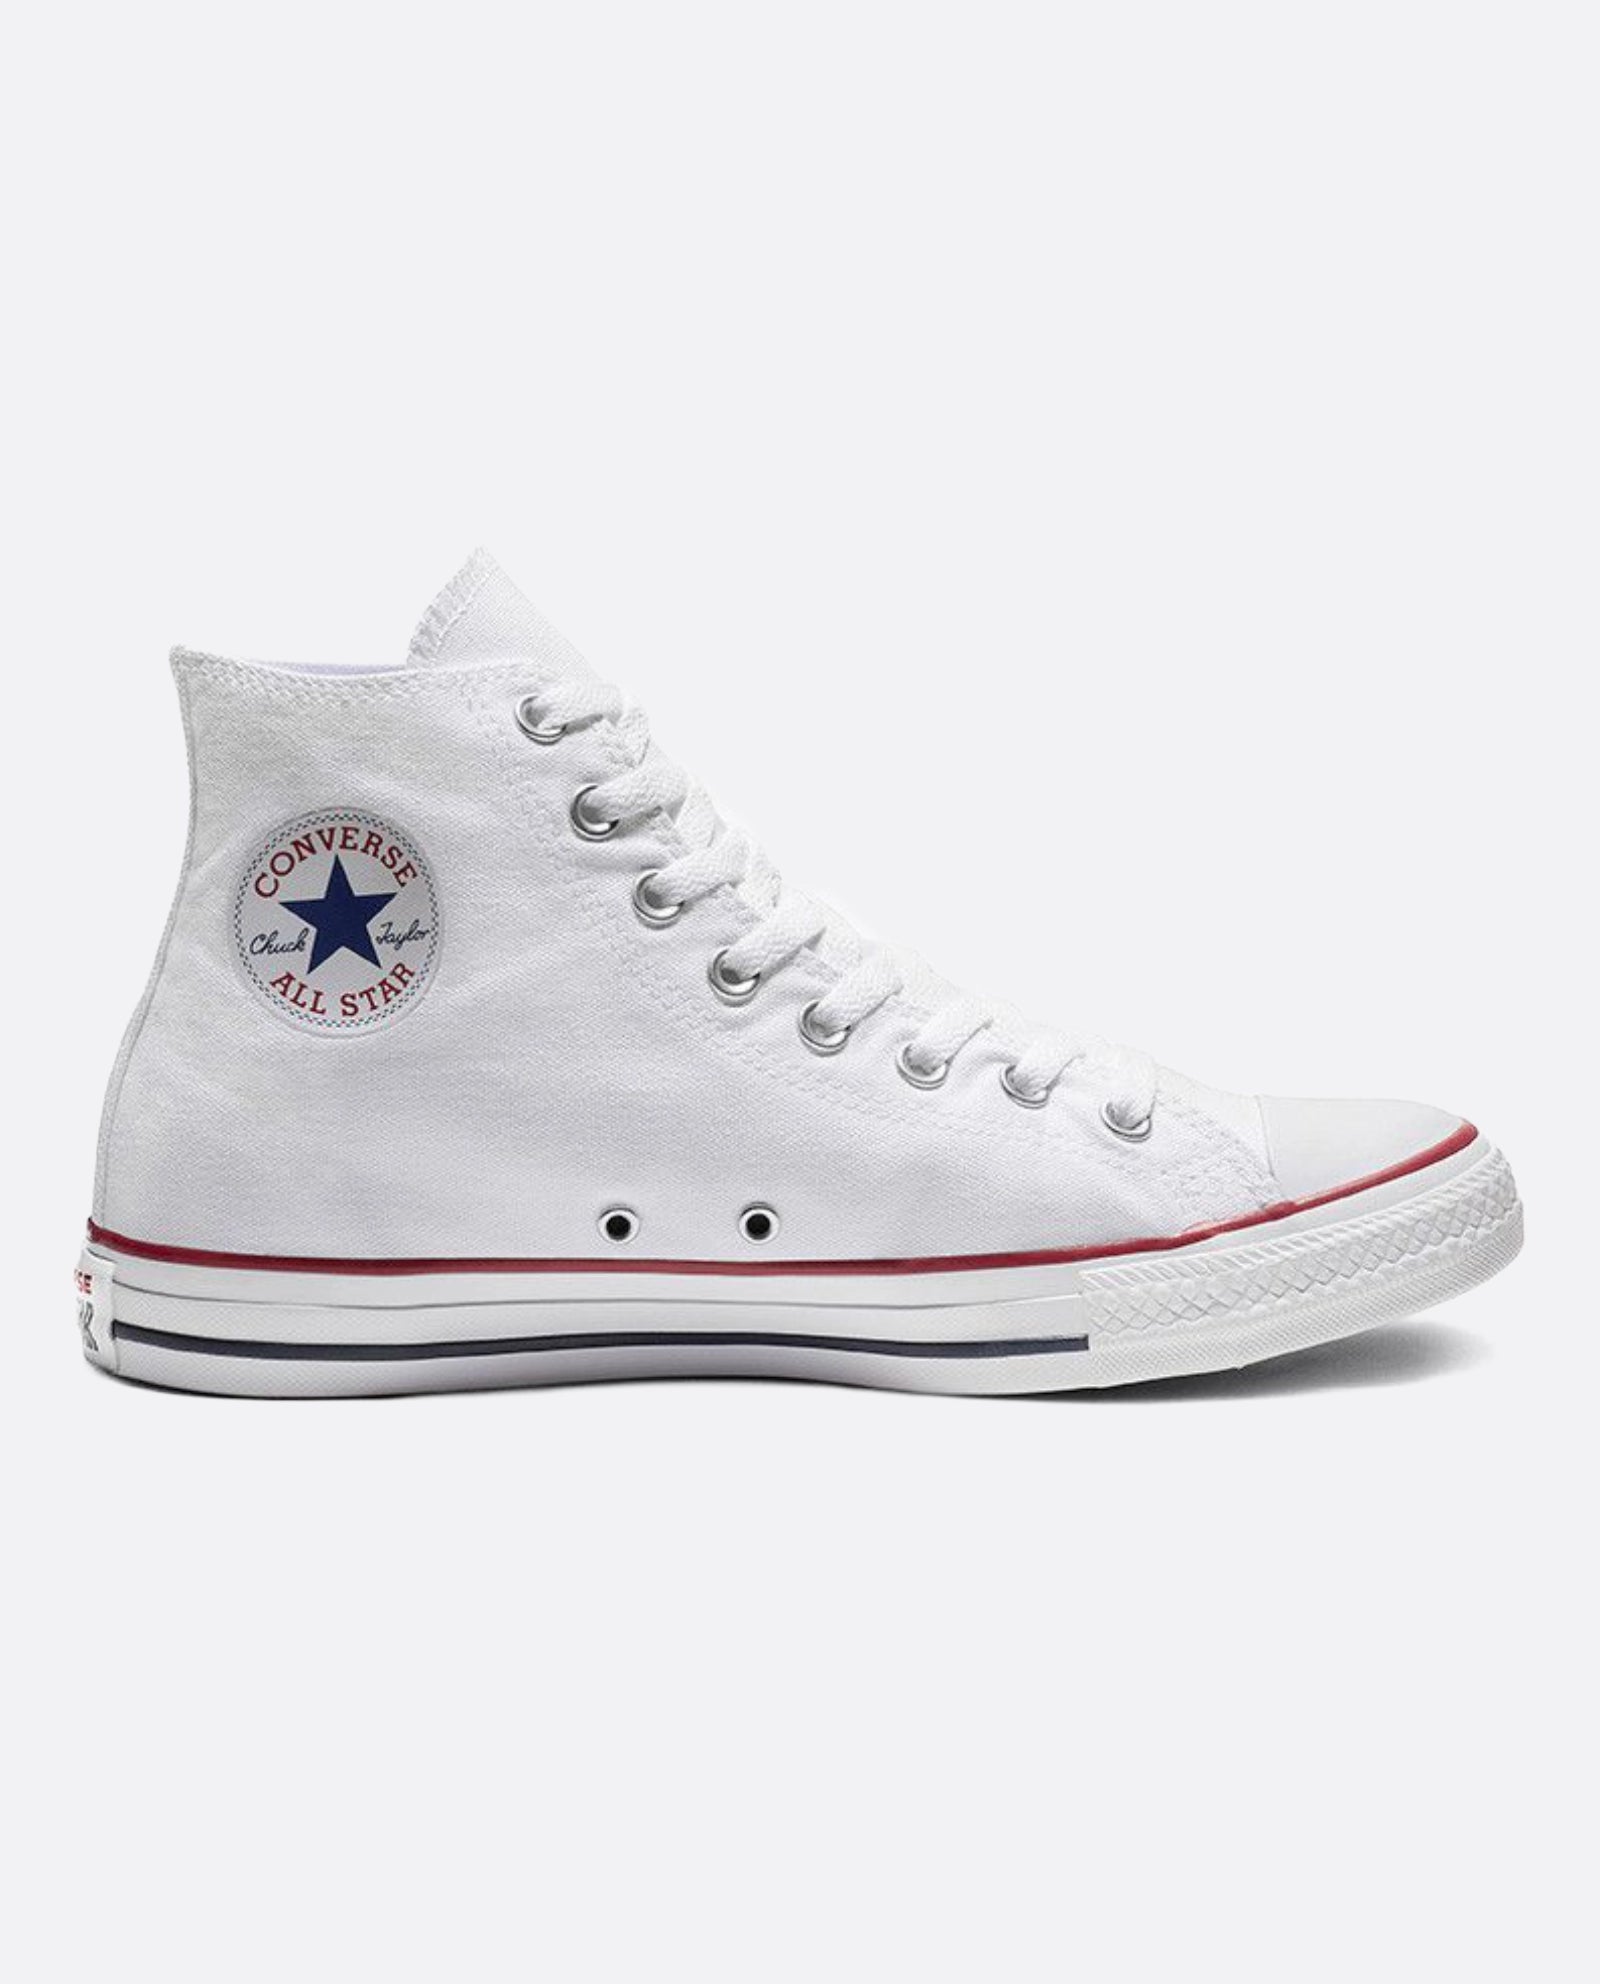 Converse Chuck Taylor All Star High Top Shoelace Length